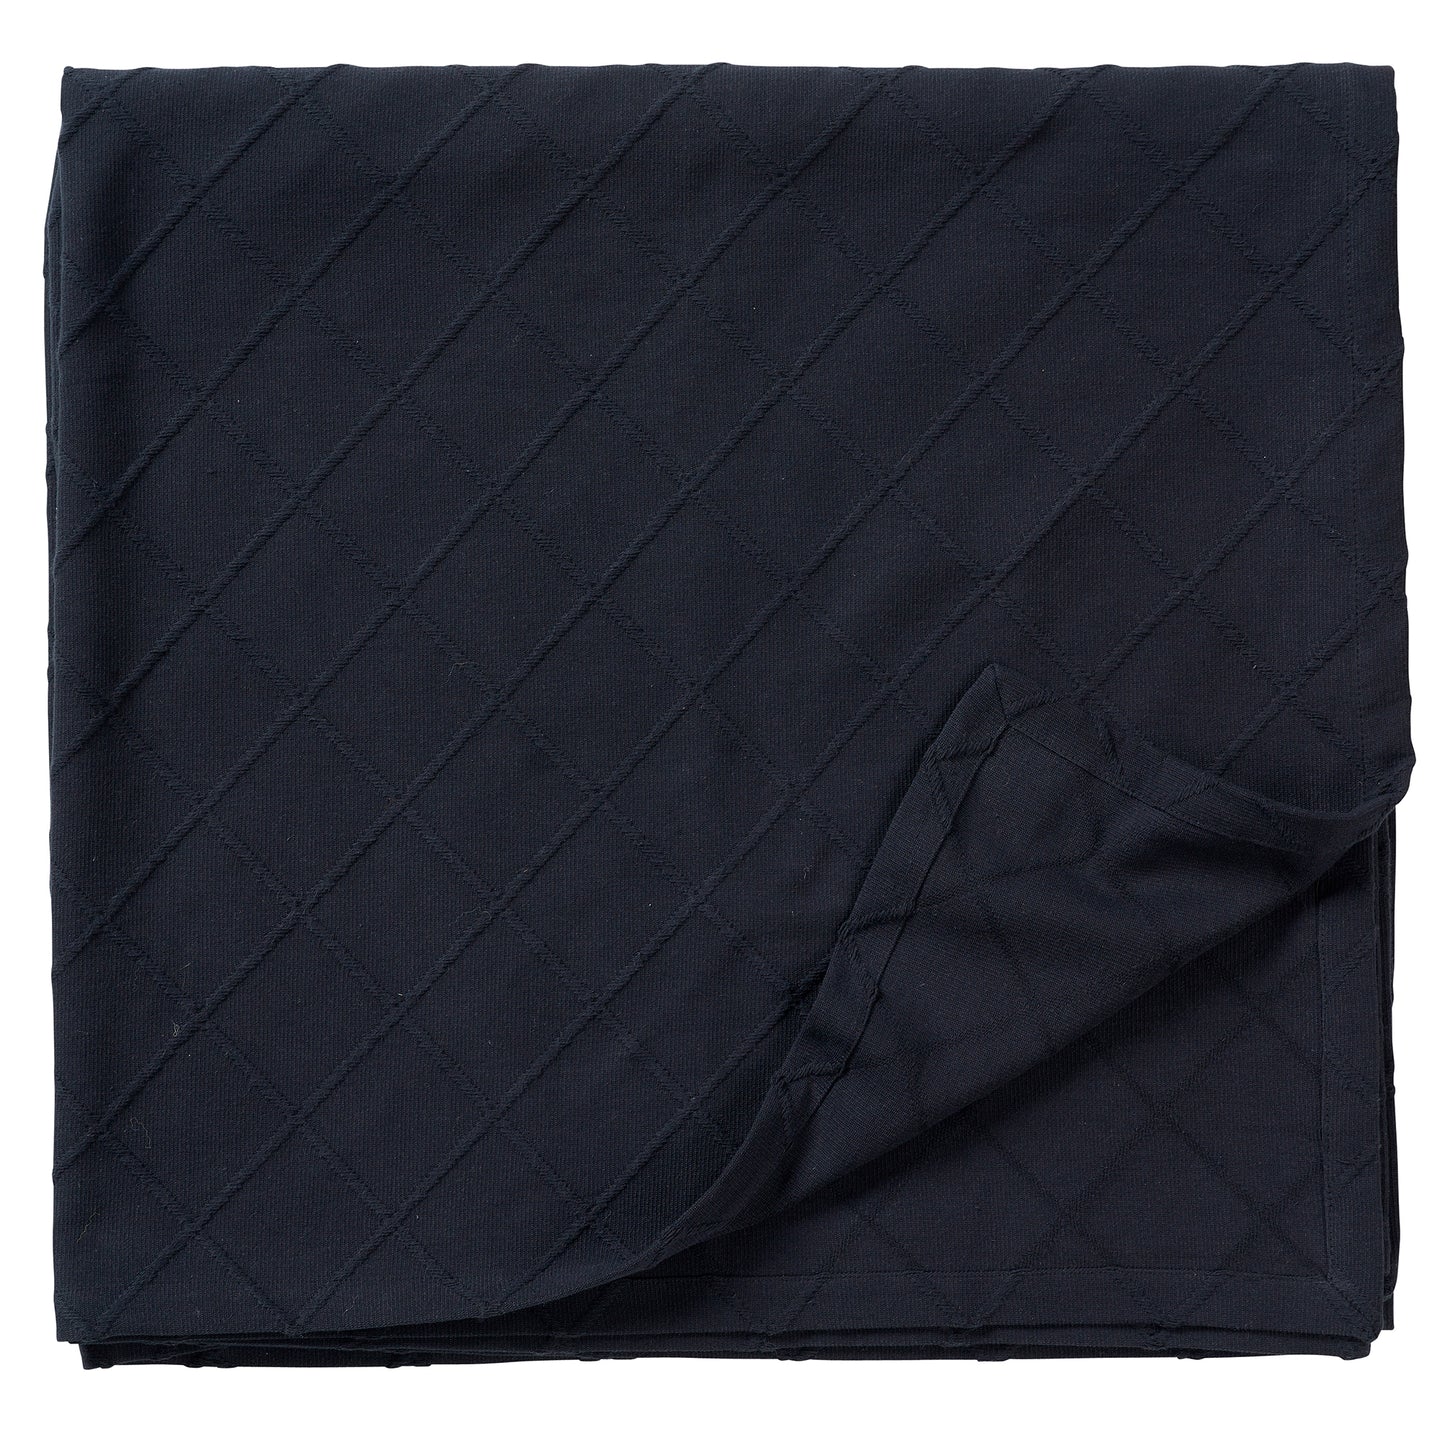 Criss Black Cotton Blanket/Bedspread